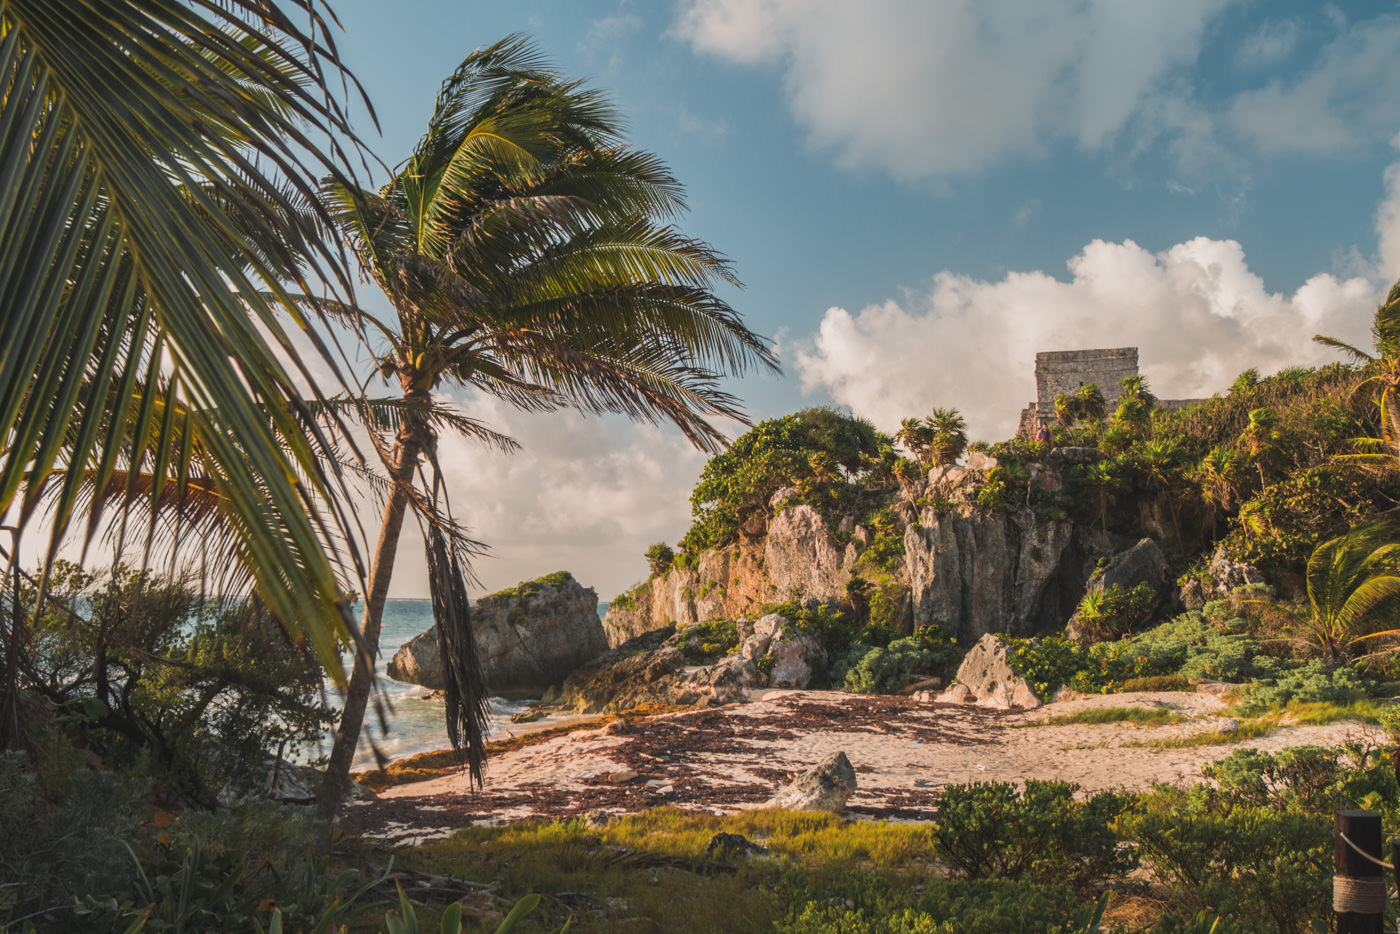 Reiseroute & Highlights der Yucatan-Halbinsel